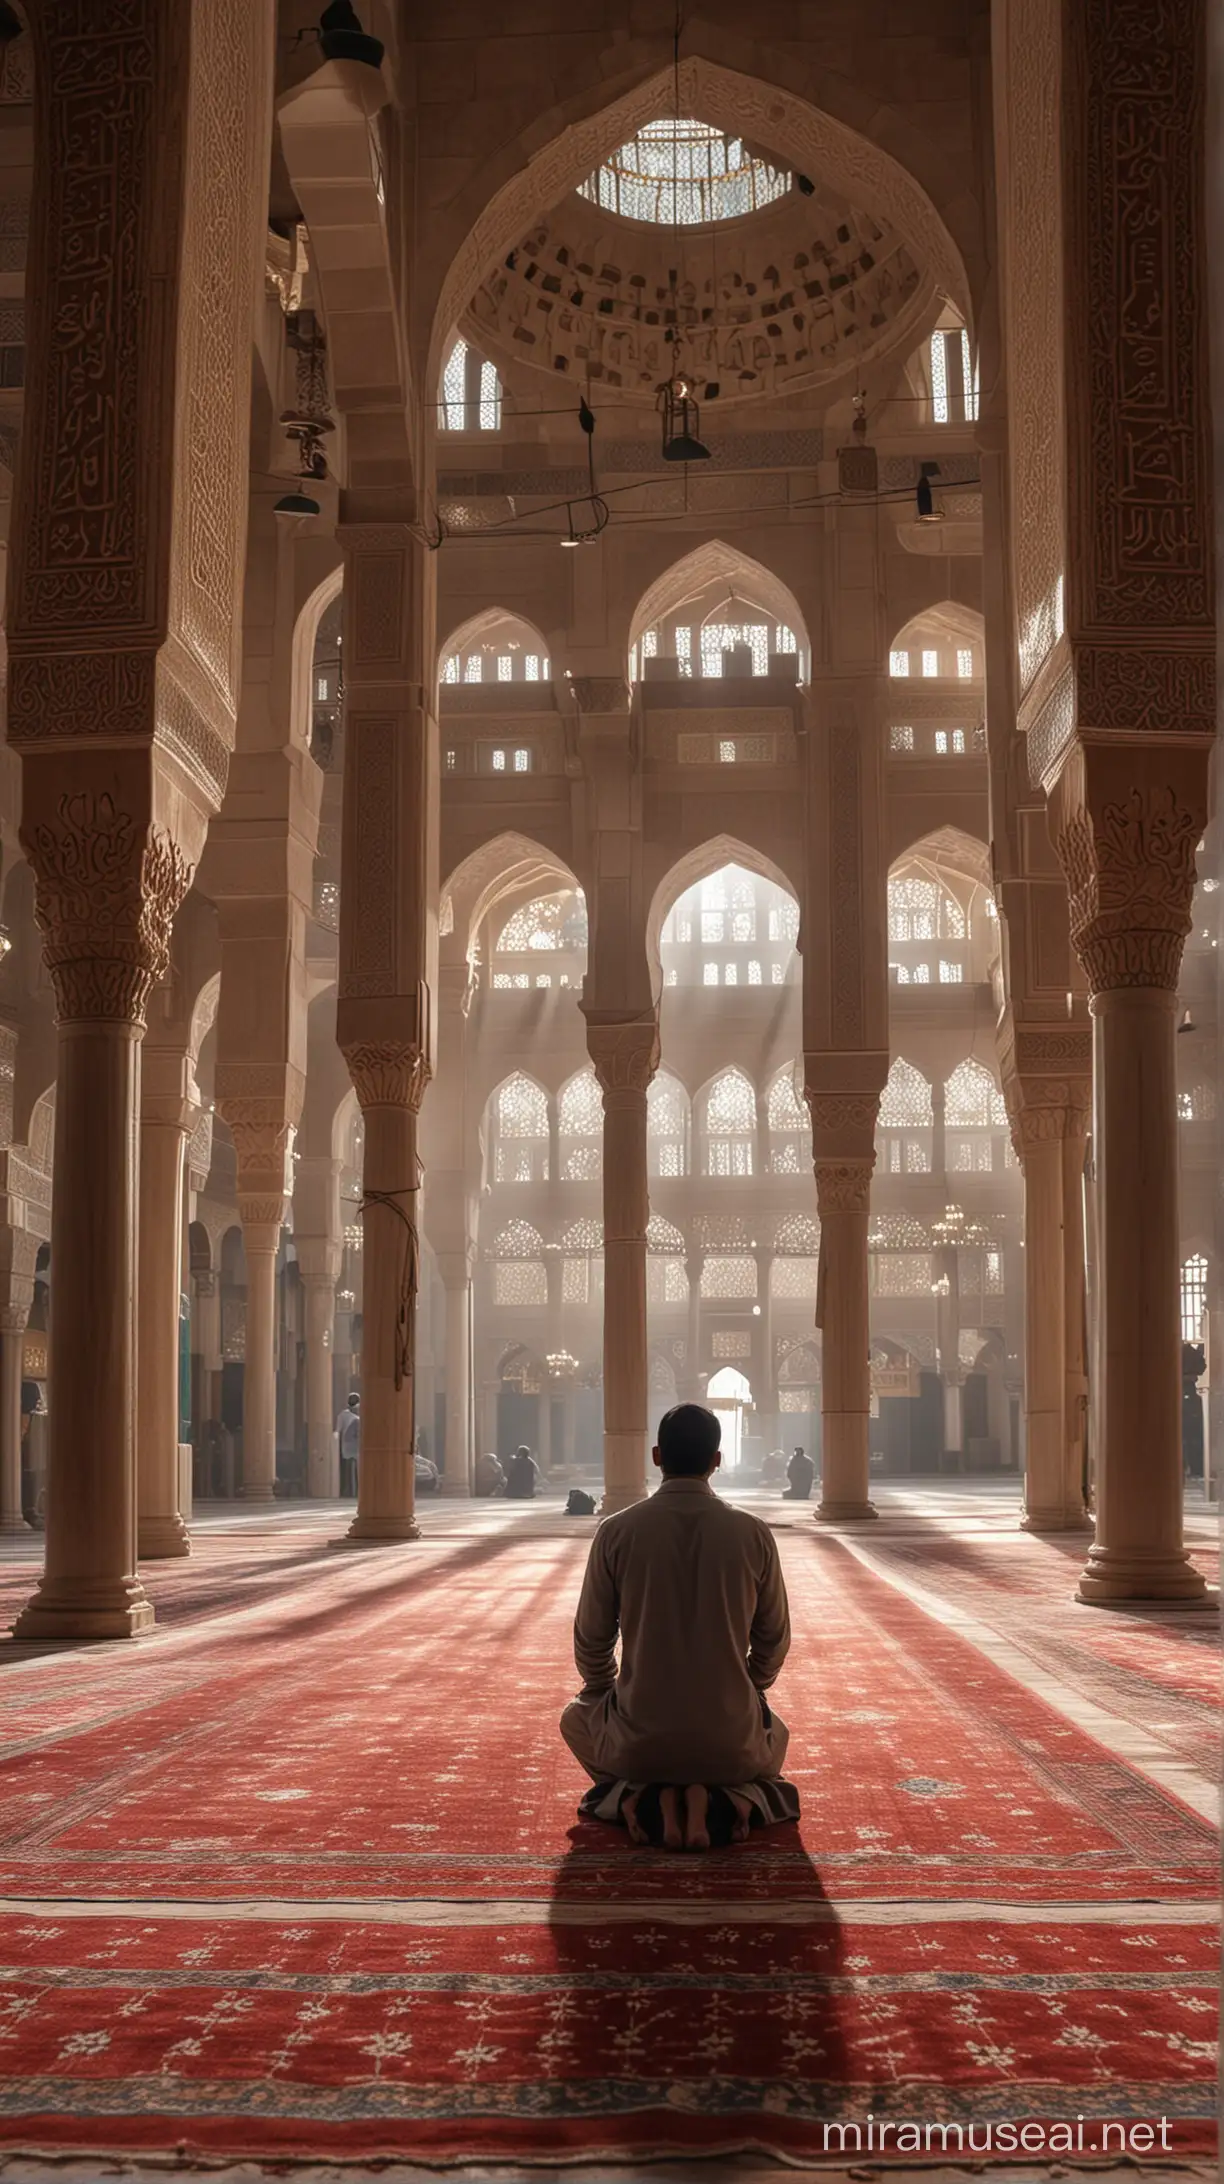 Devout Muslim Man Praying in Magnificent Mosque